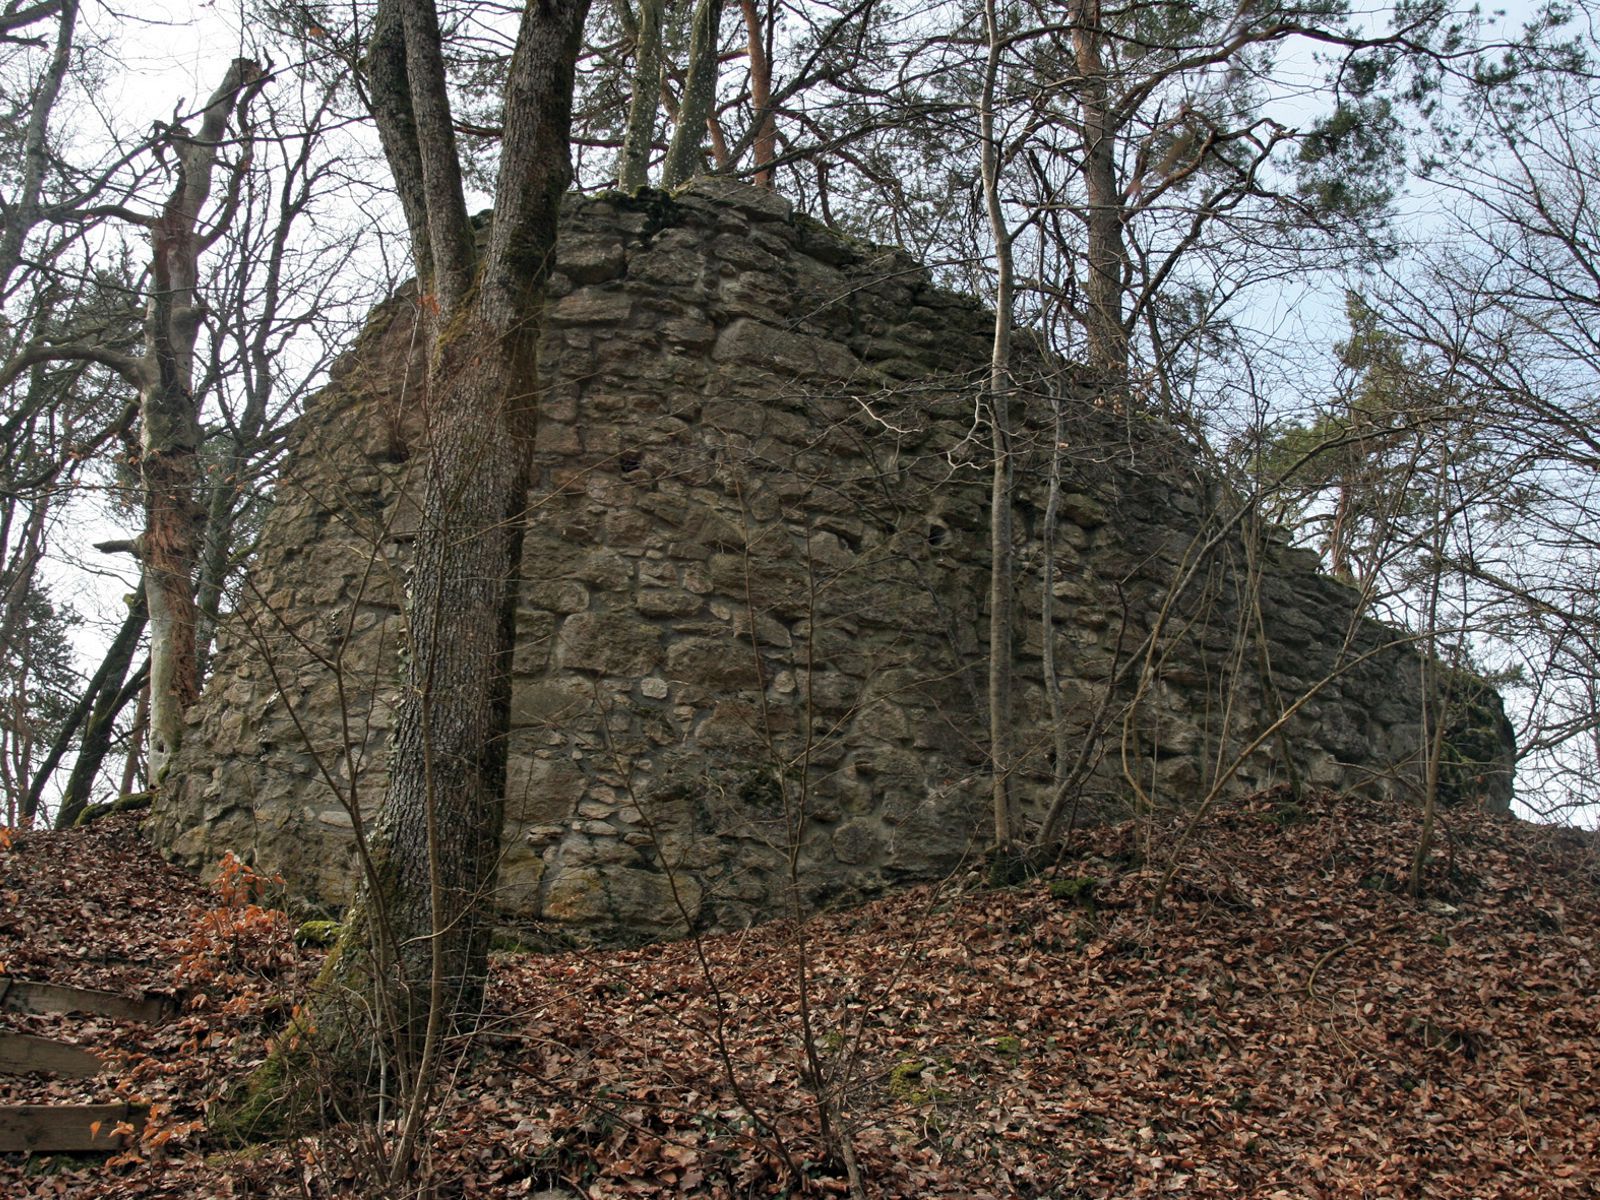                                                     Ruine Krenkingen                                    